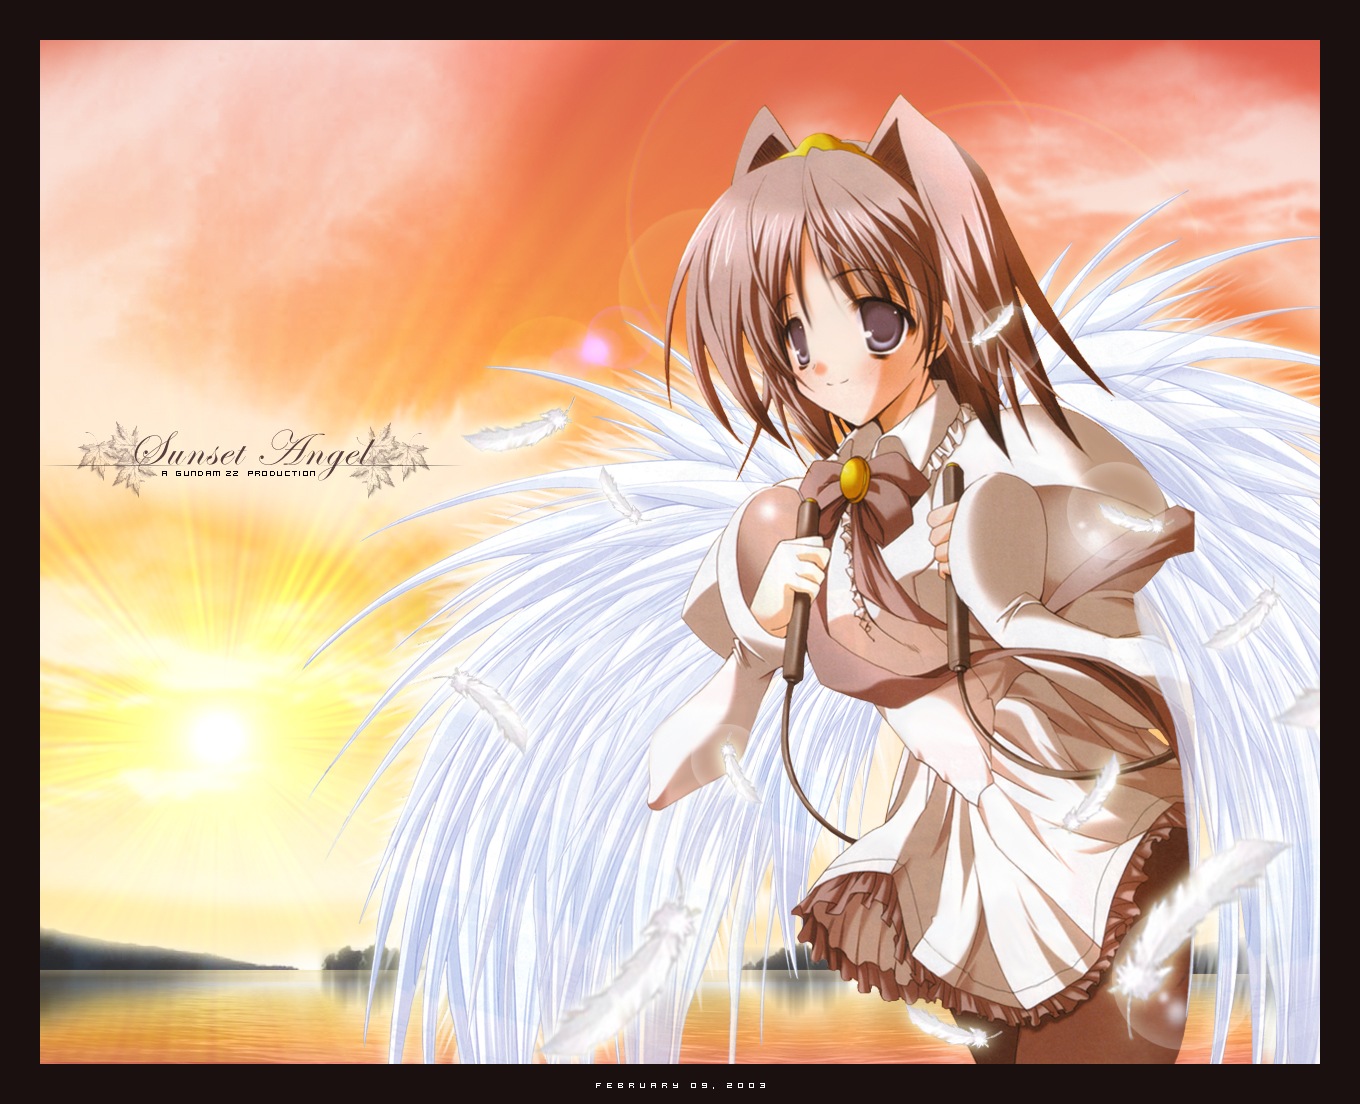 Wallpaper Manga sunsel angel